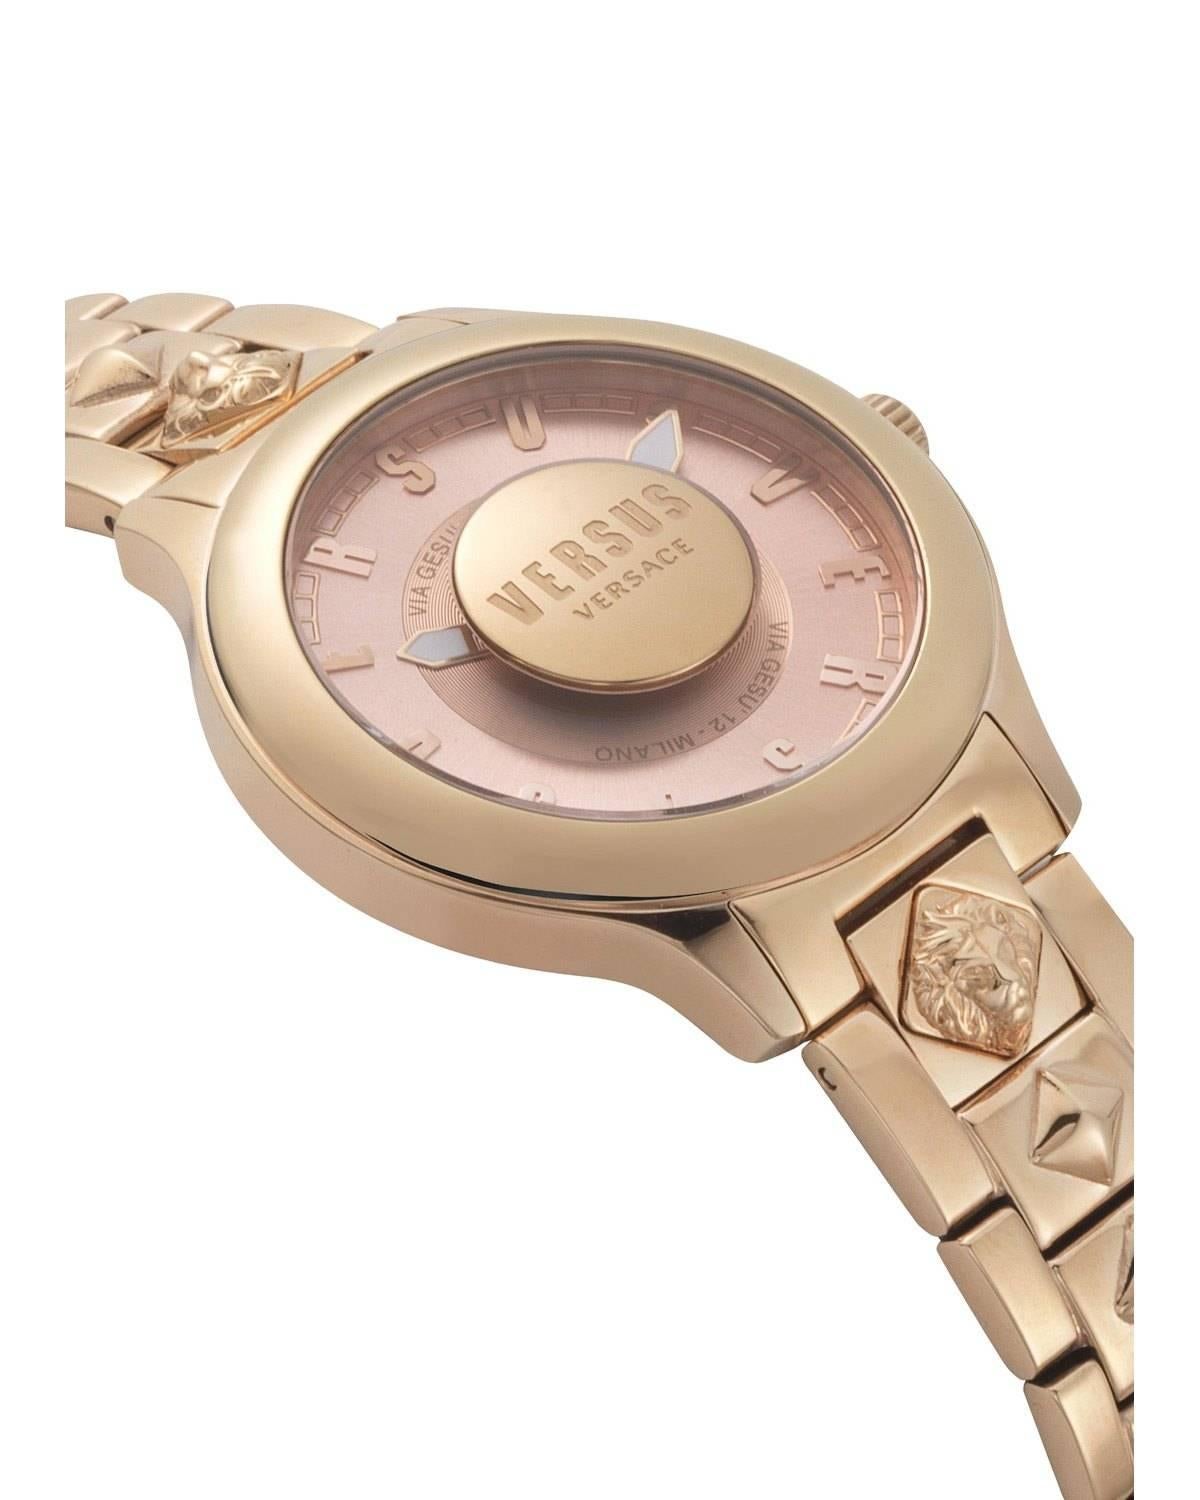 Versus by Versace rosegold stainless steel watch